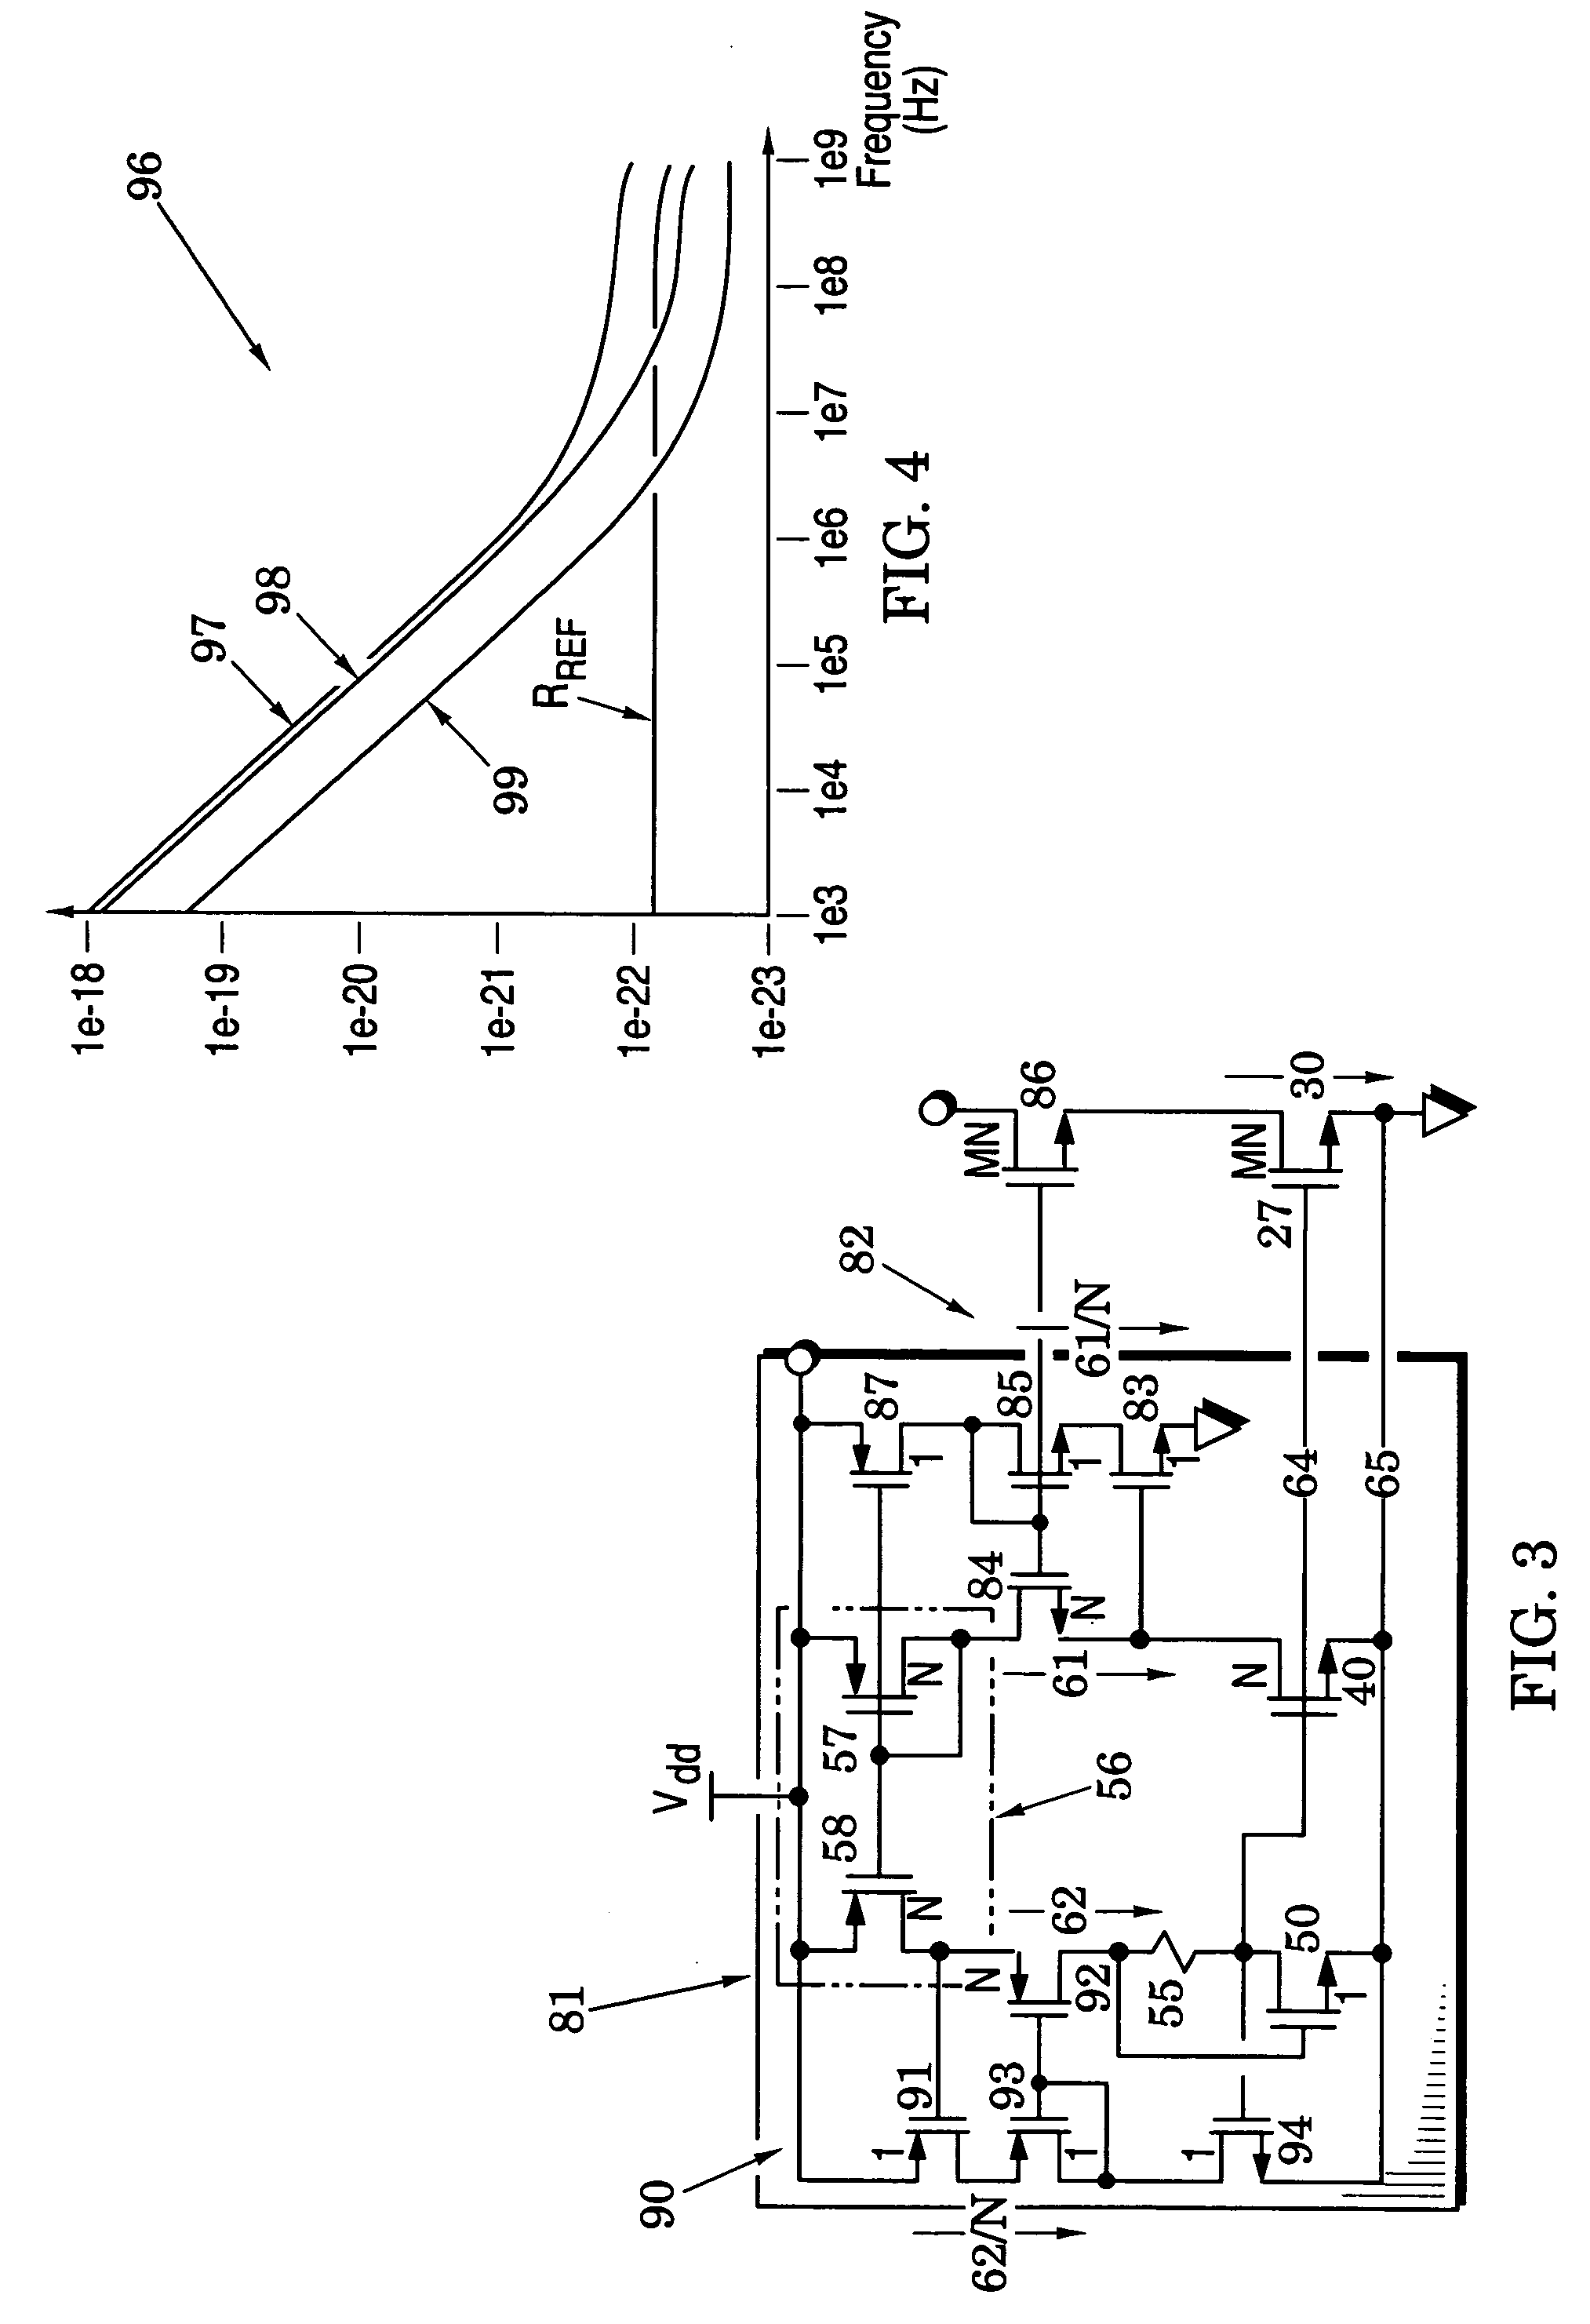 Amplifier systems with low-noise, constant-transconductance bias generators